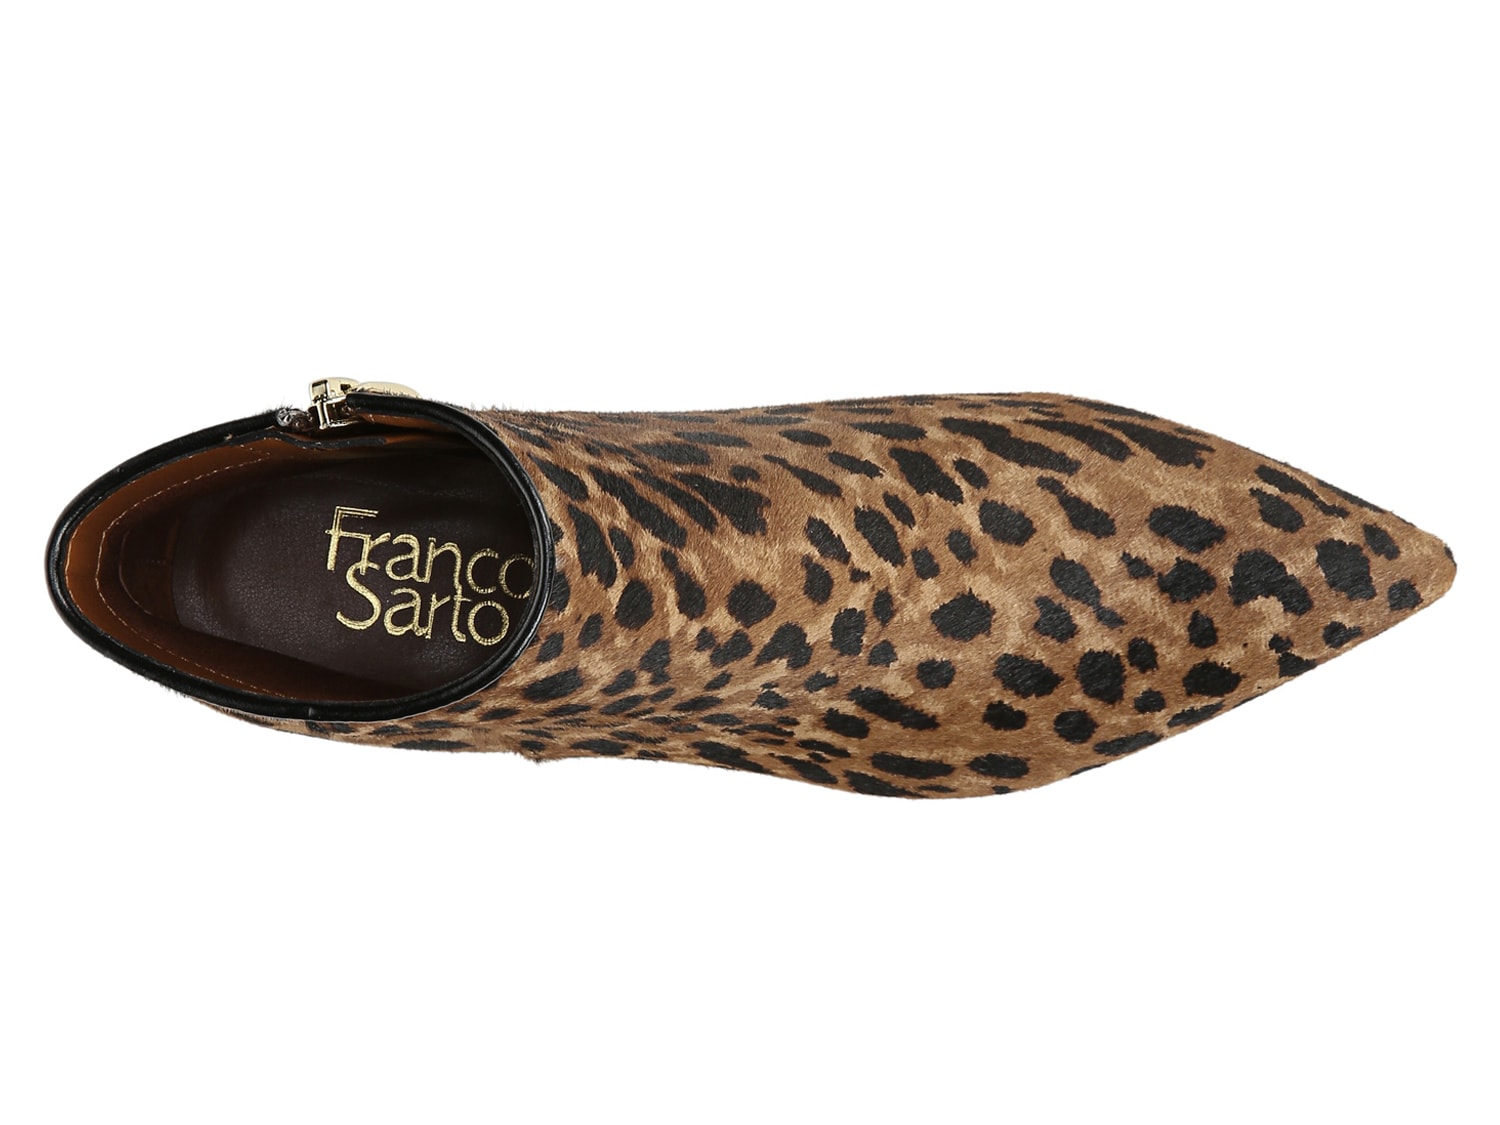 franco sarto orchard leopard booties